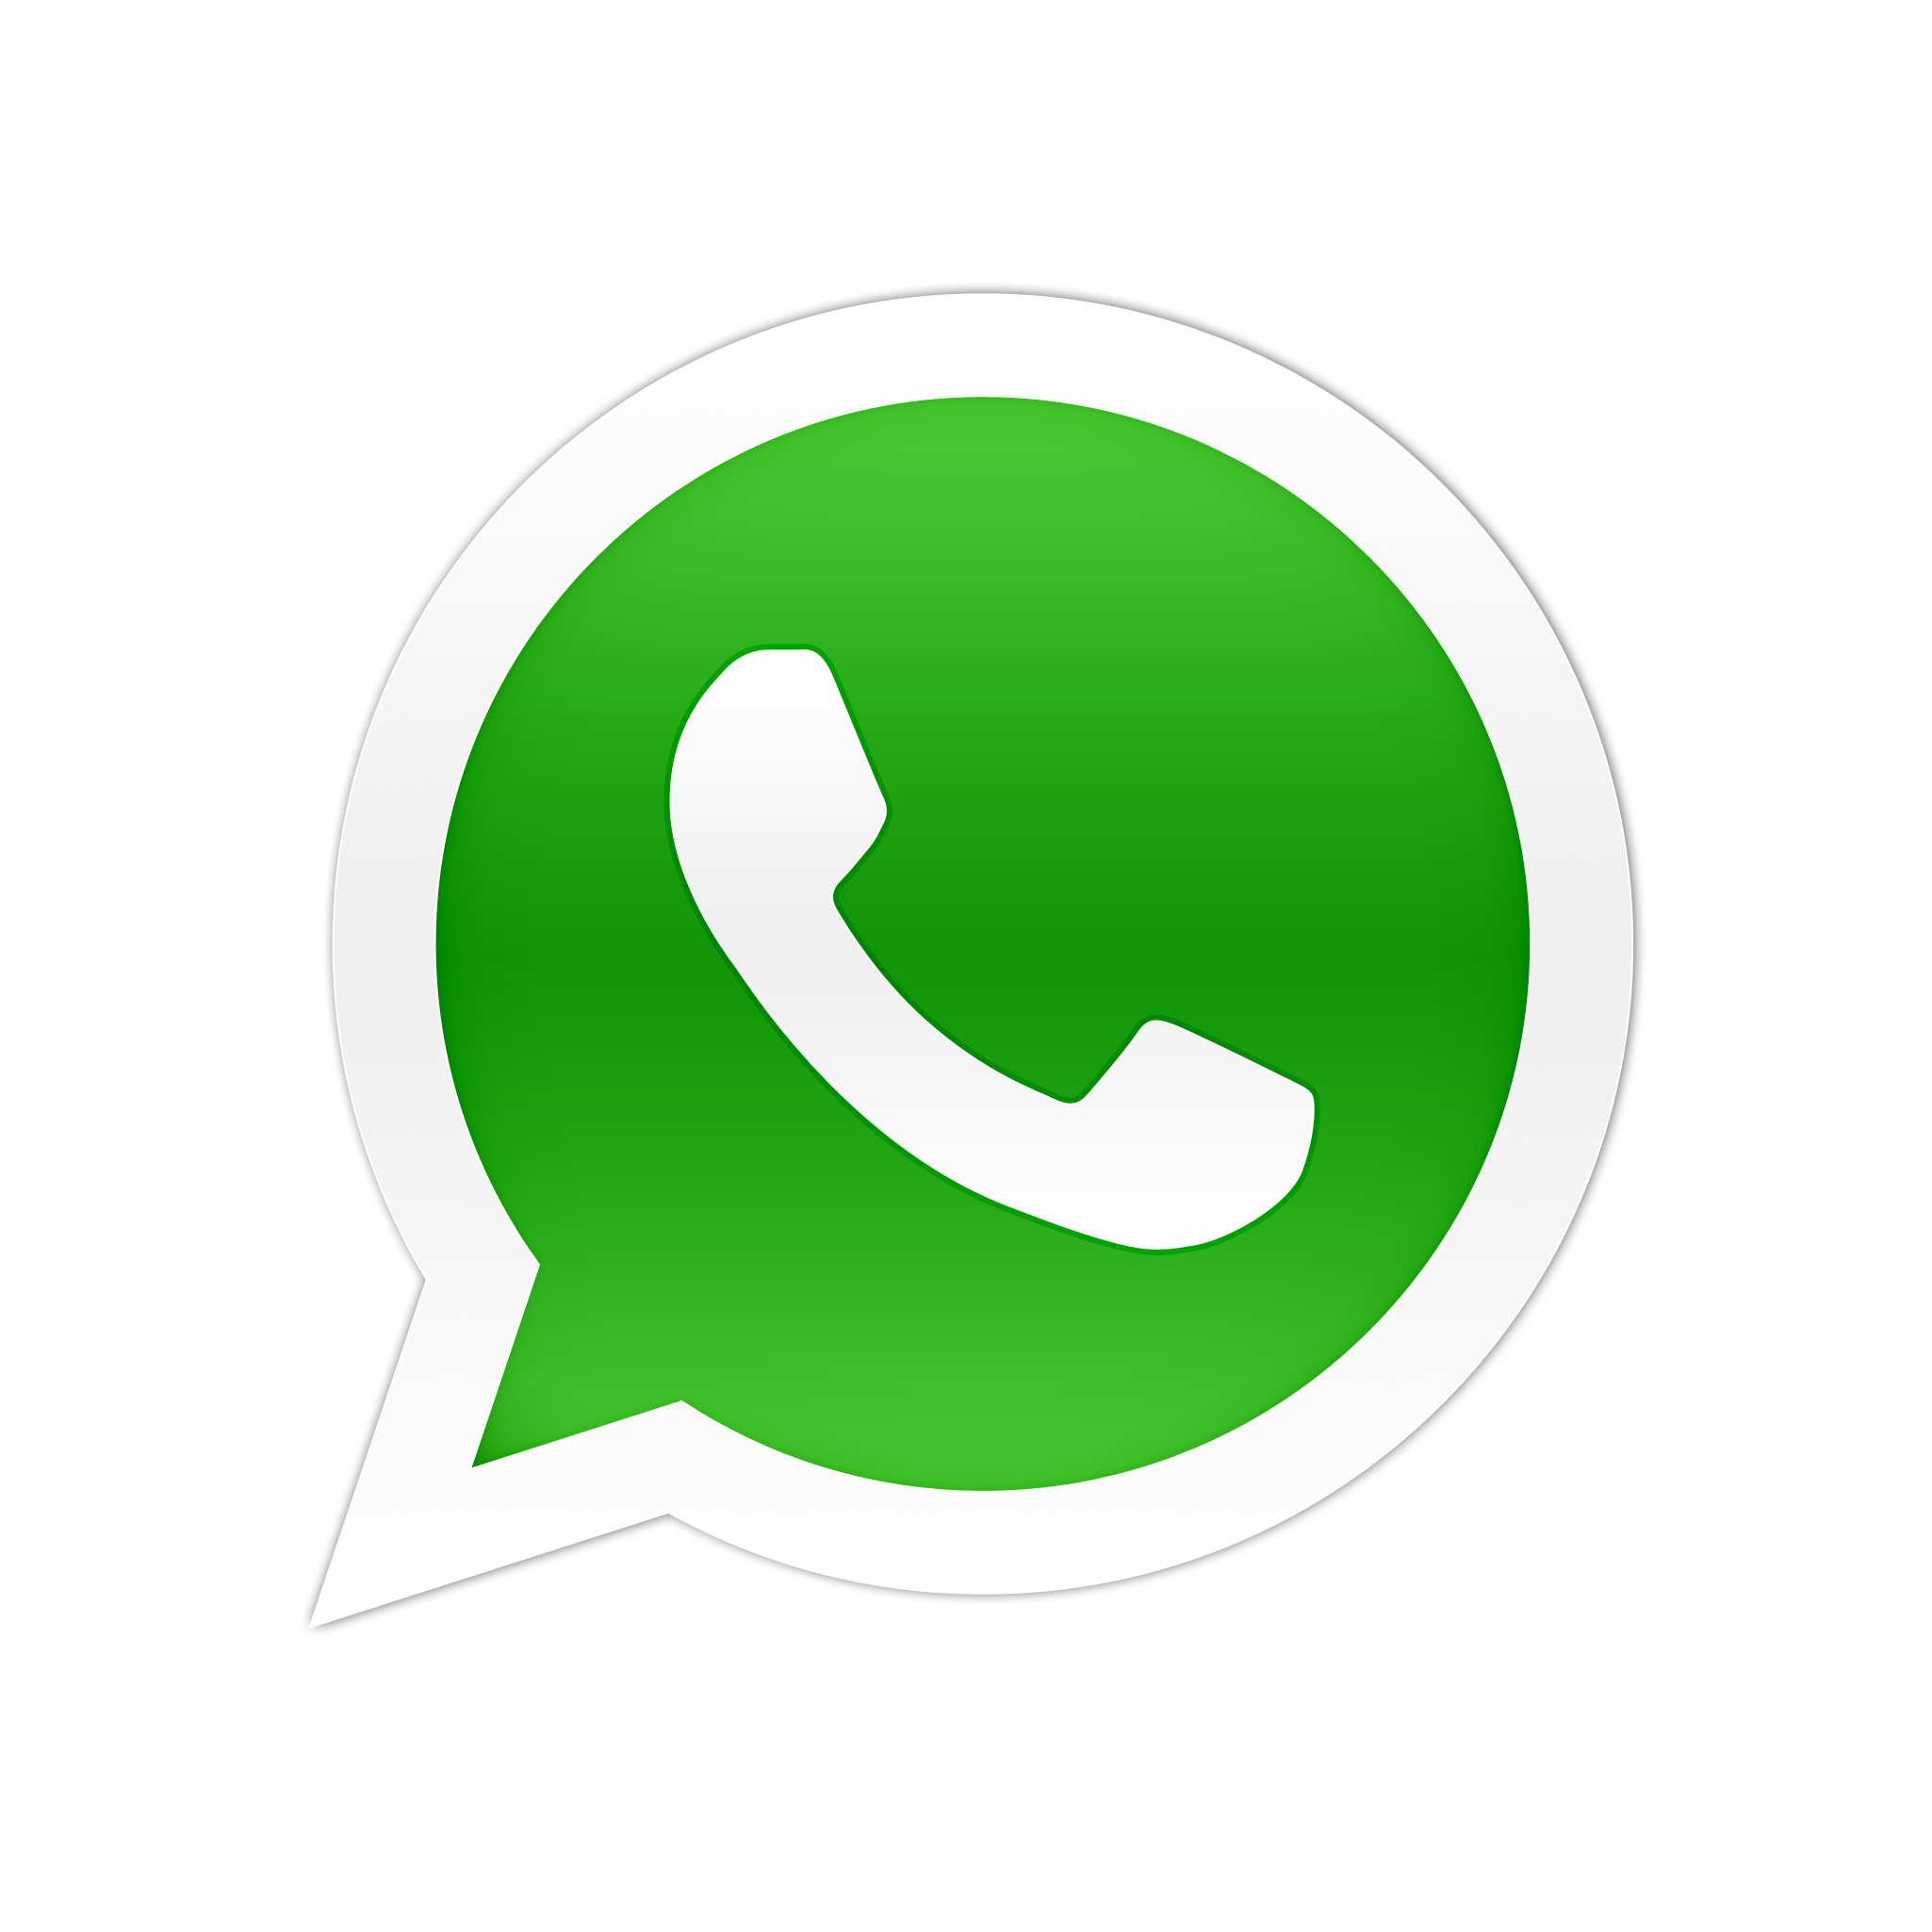 whatsapp_logo1